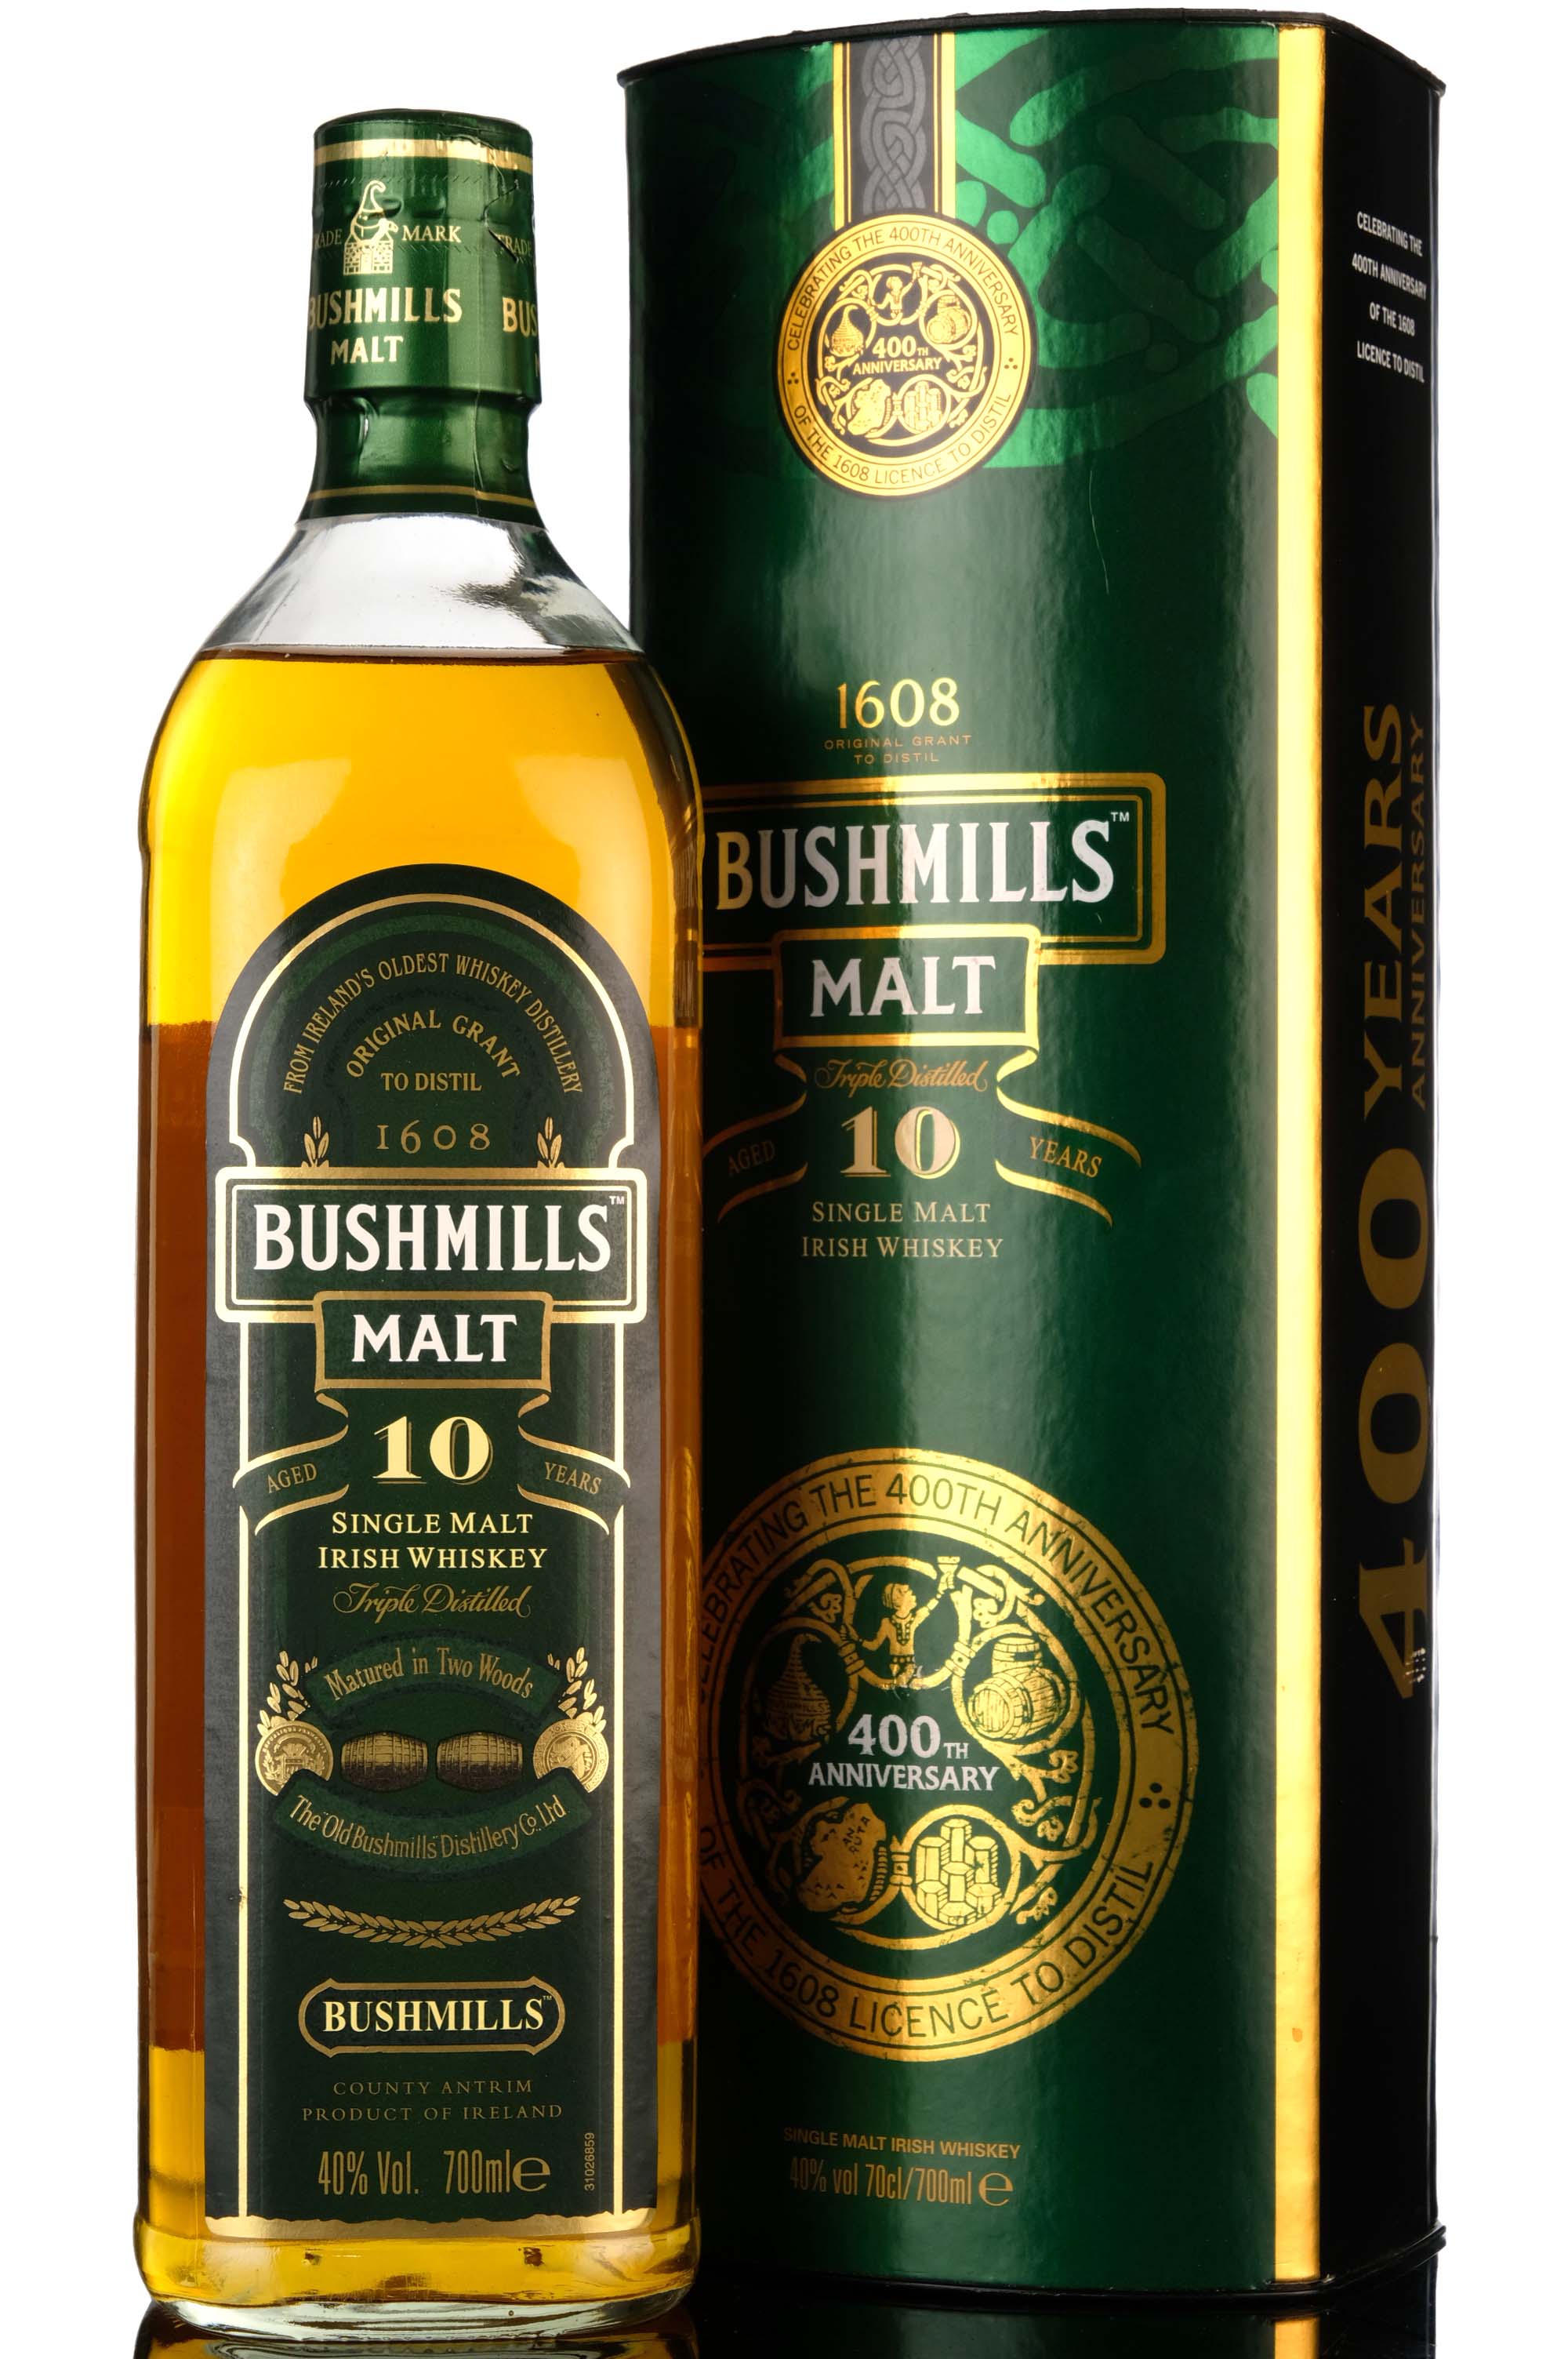 Bushmills Malt 10 Year Old - 400th Anniversary Of The Original Grant To Distill - 2008 Rel